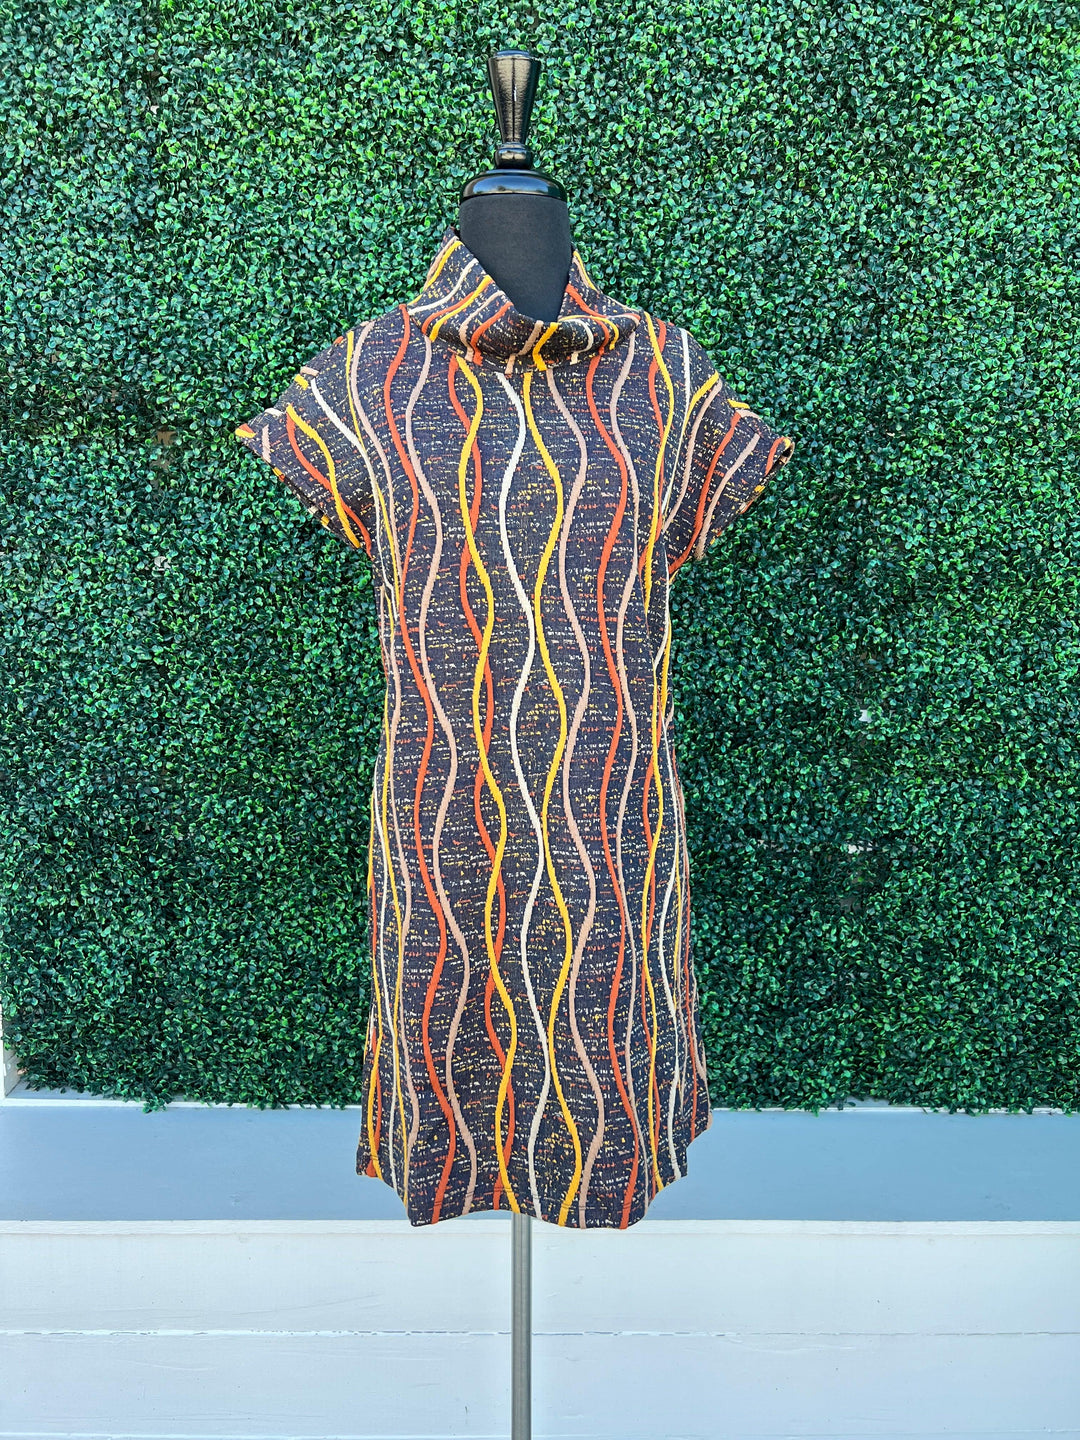 Burnt Orange/ Yellow/ Brown 70s print mock cowl neck dress